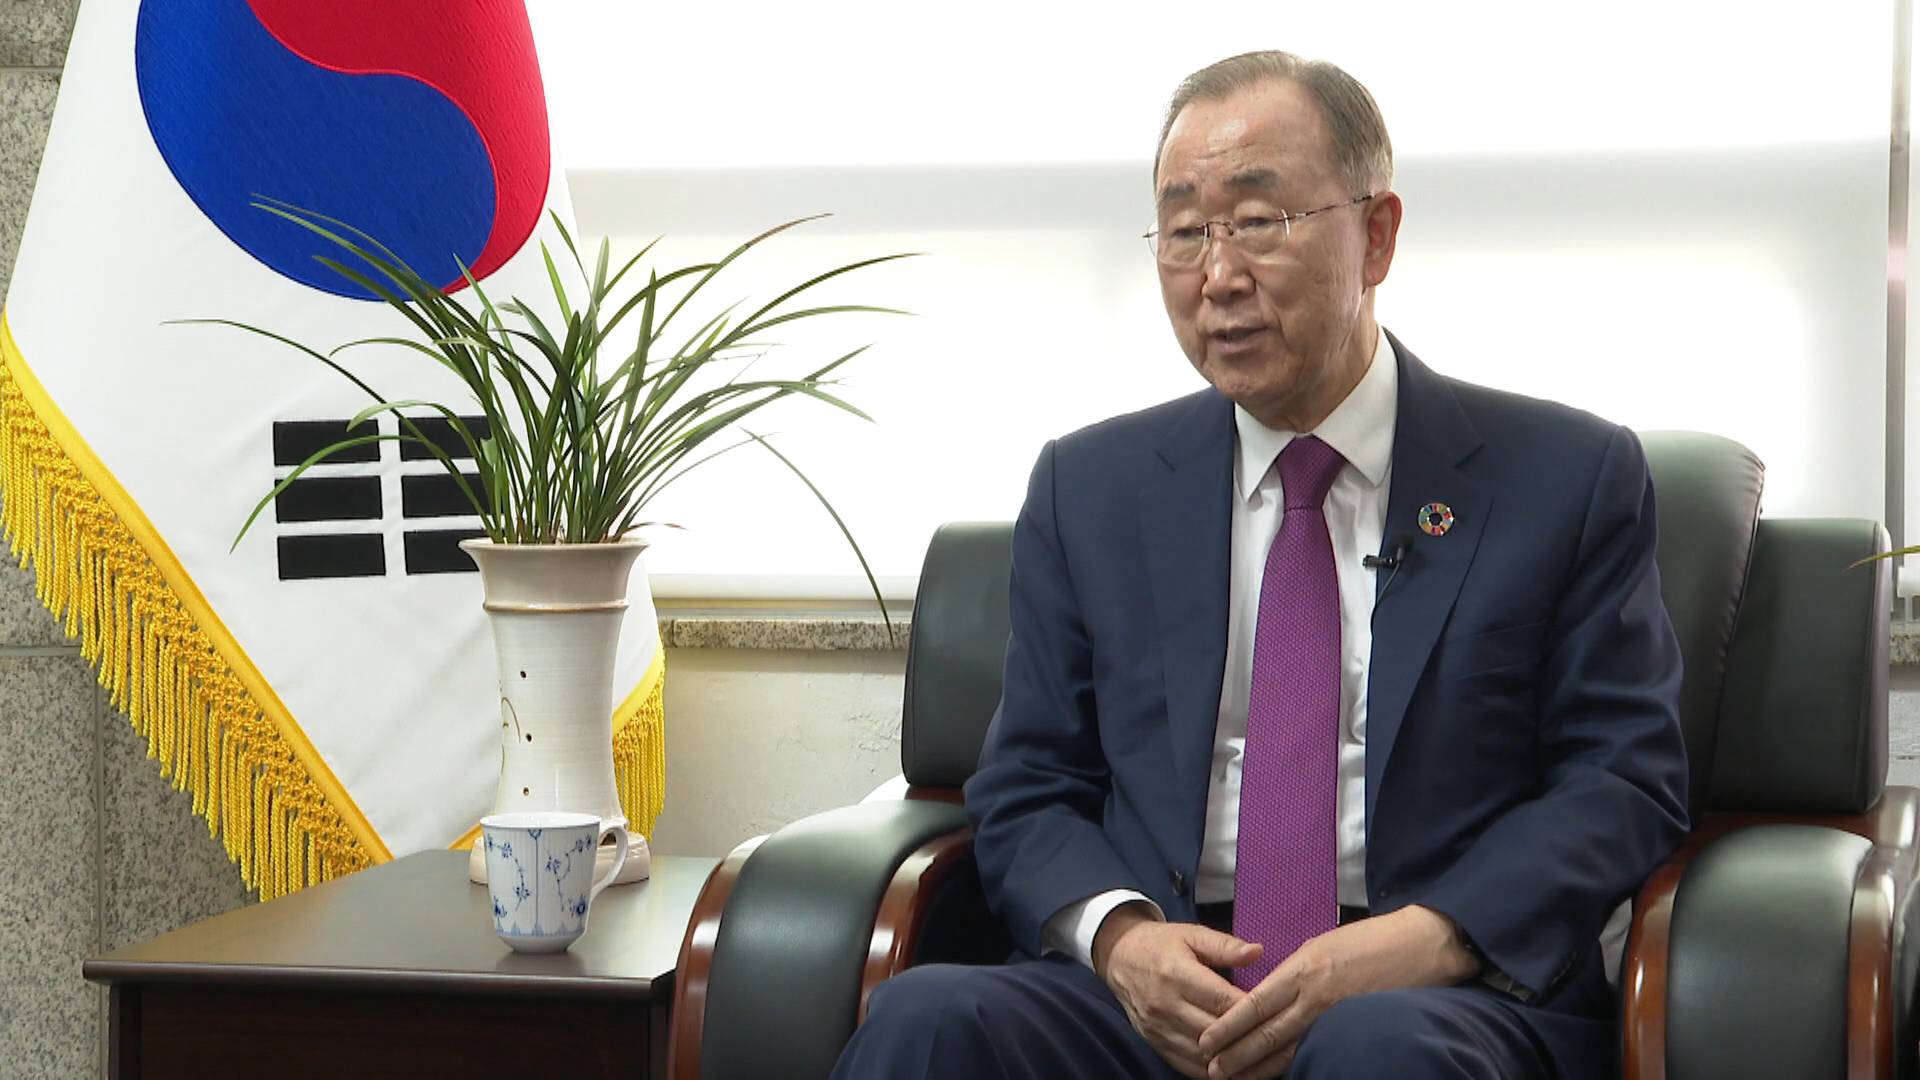 GLOBALink | Ban Ki-moon praises China's leadership in global affairs